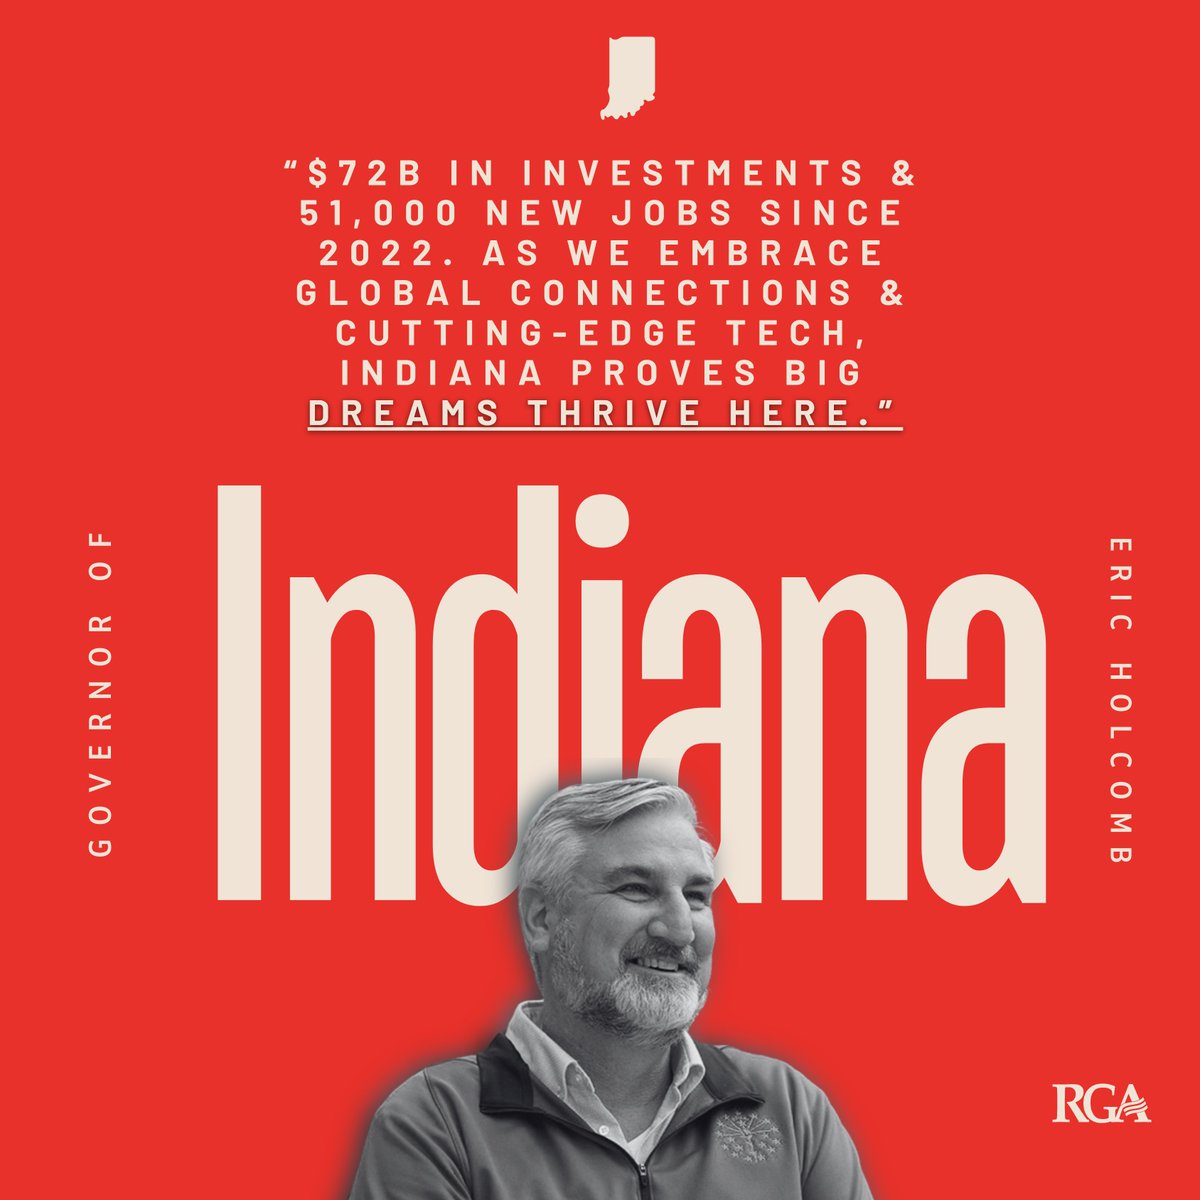 Big dreams thrive in Indiana thanks to @HolcombForIN vision!